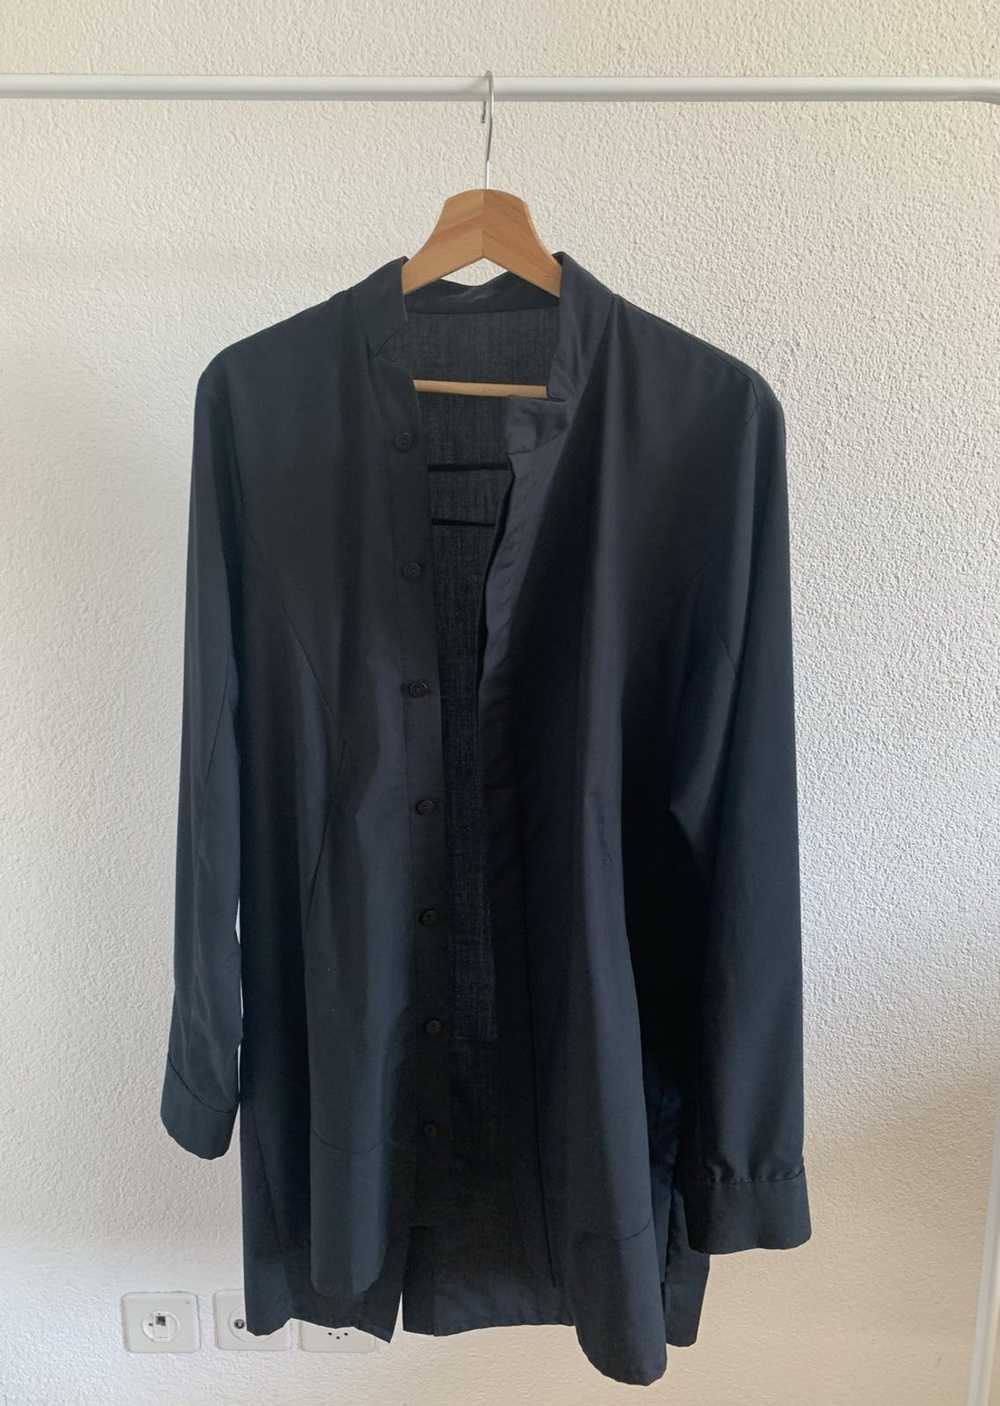 Indice Studio Deconstructed shirt coat - image 3